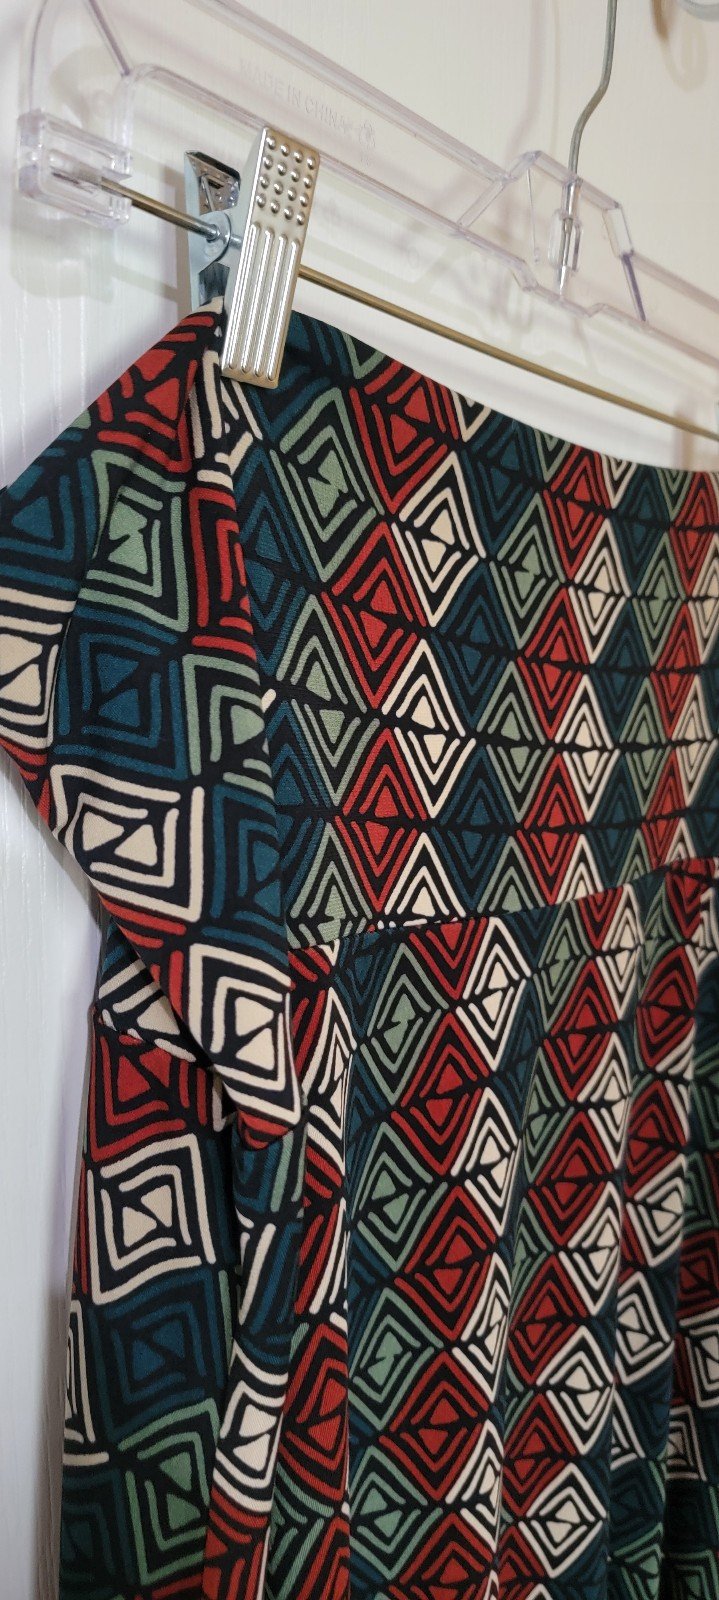 Exclusive Lularoe Maxi/ Midi Skirt ~ Gorgeous Earthy Colors Geometric Pattern ~ Size XL kOwthU7te Online Exclusive